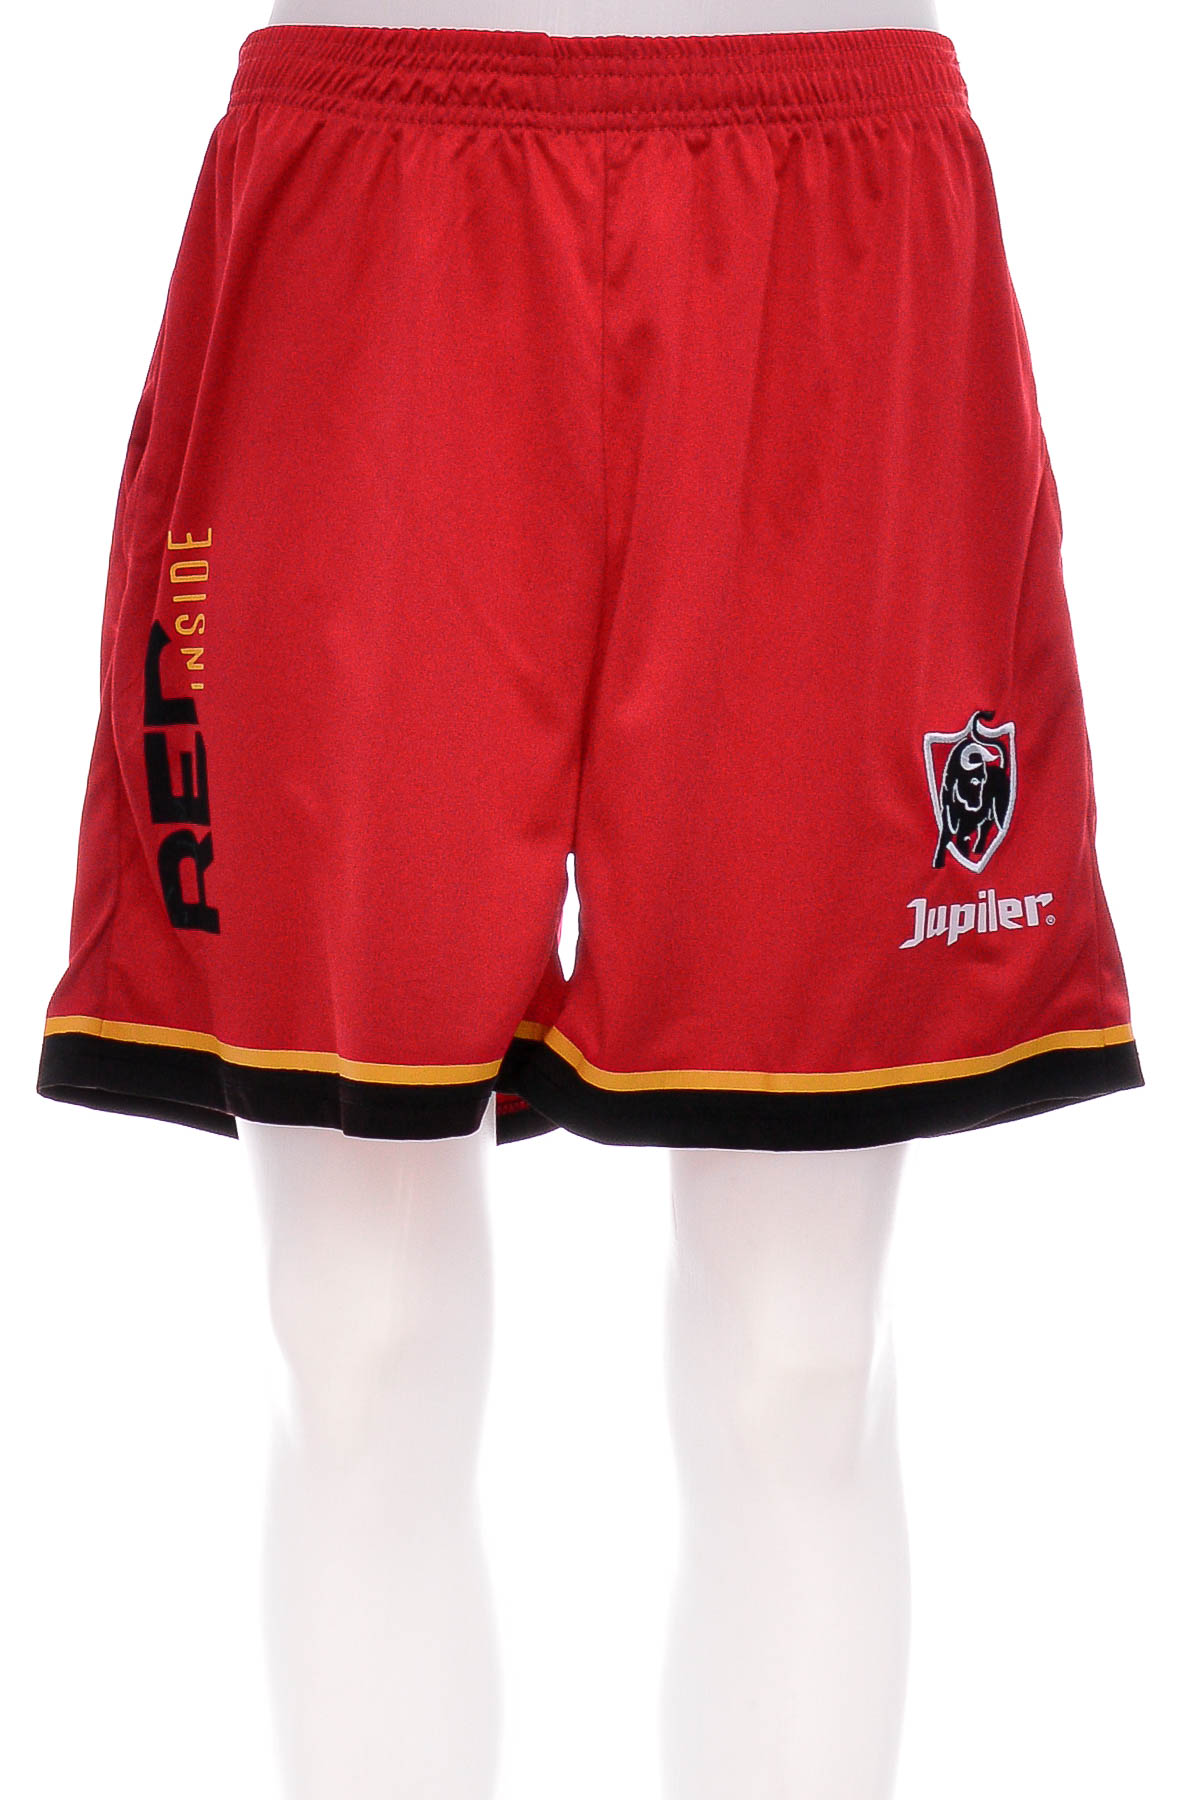 Men's shorts - Jupiler - 0